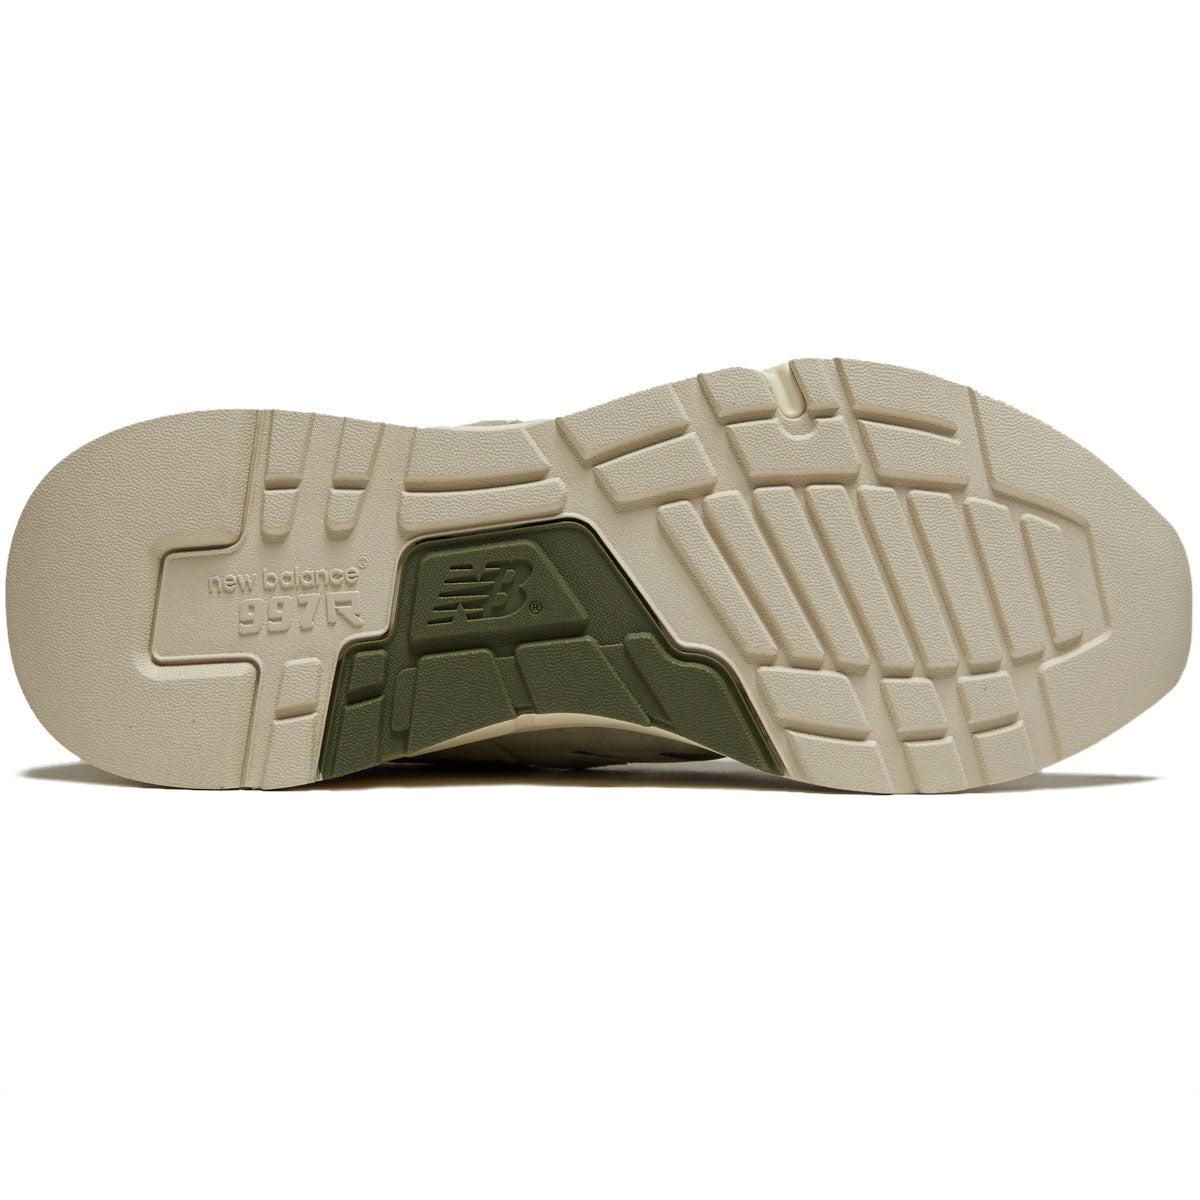 New Balance 997R Shoes - Dark Olivine image 4